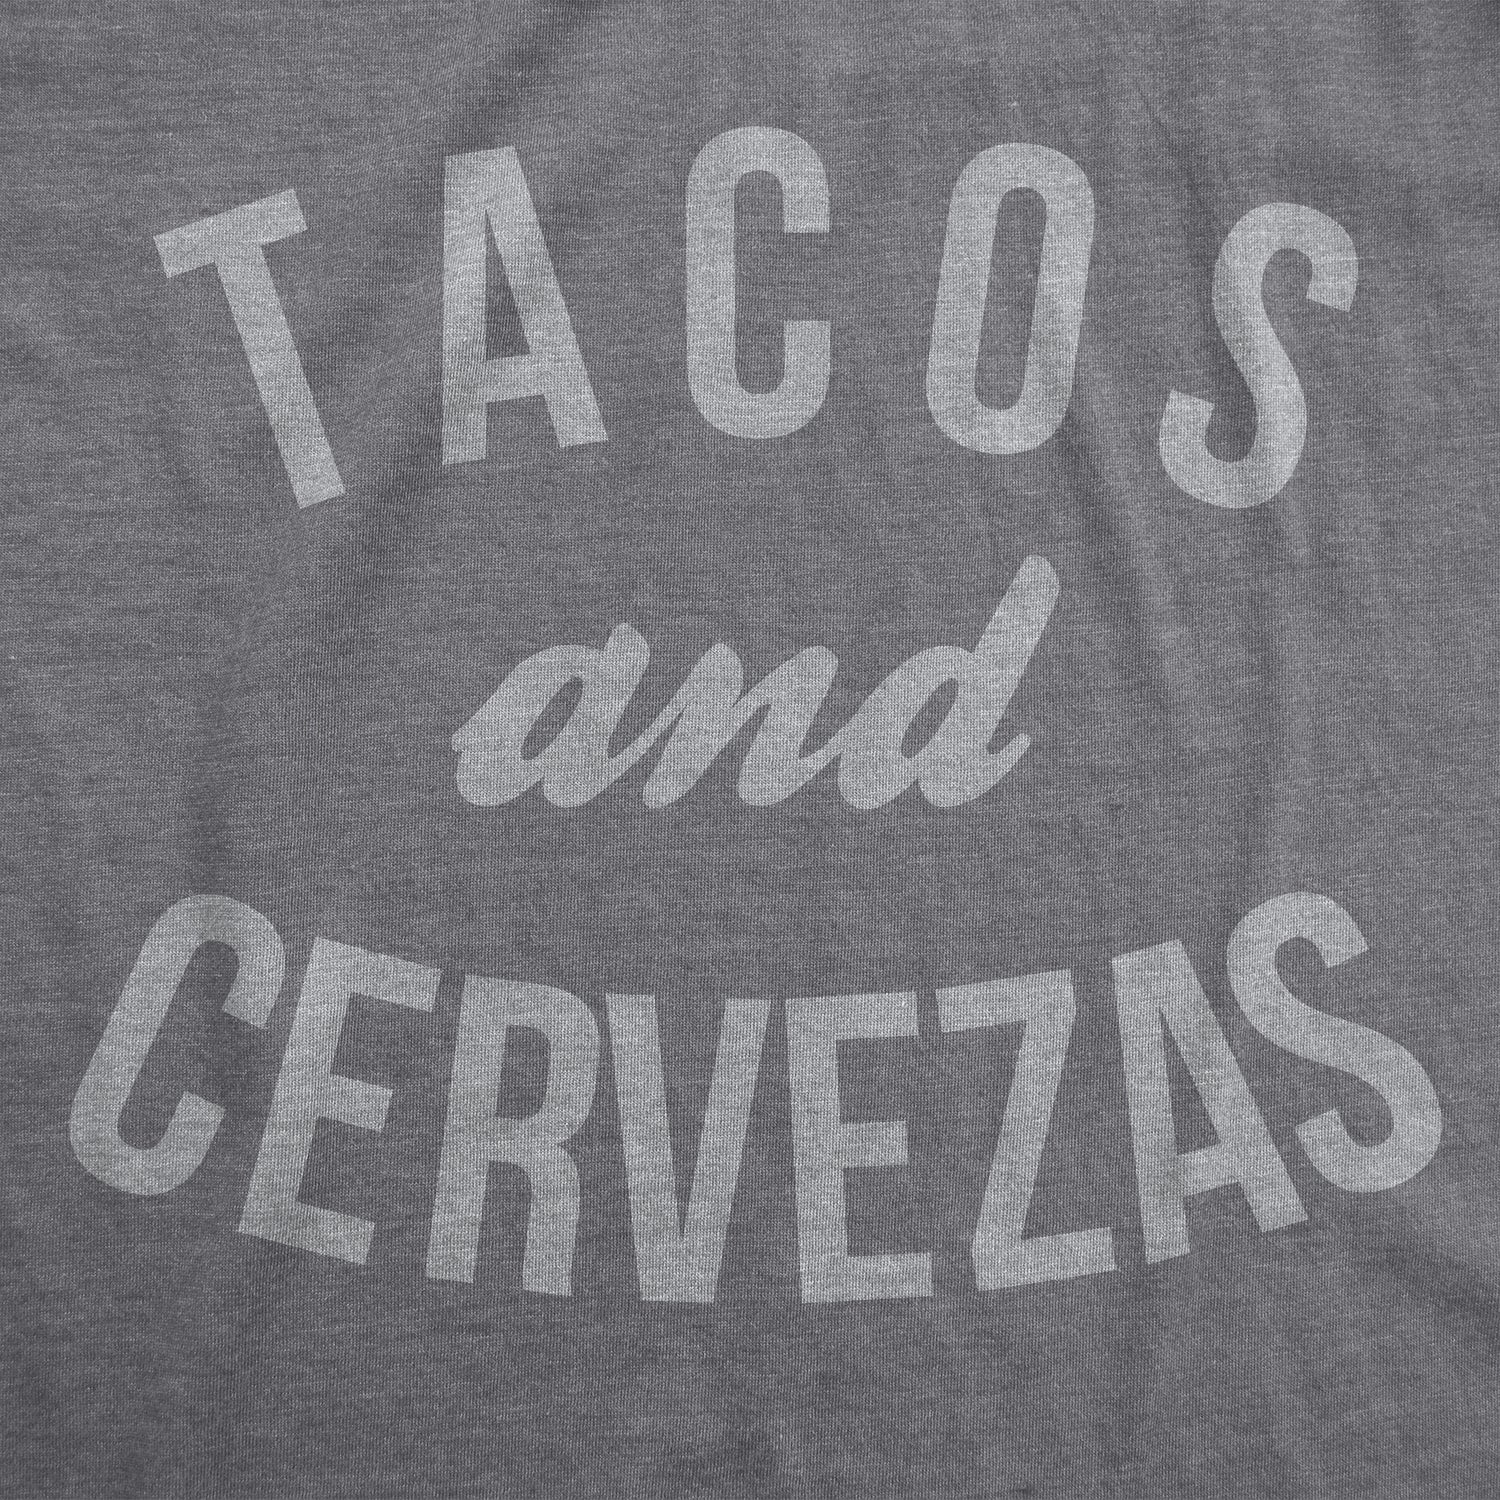 Funny Tacos and Cervezas Womens T Shirt Nerdy Cinco De Mayo beer Tee